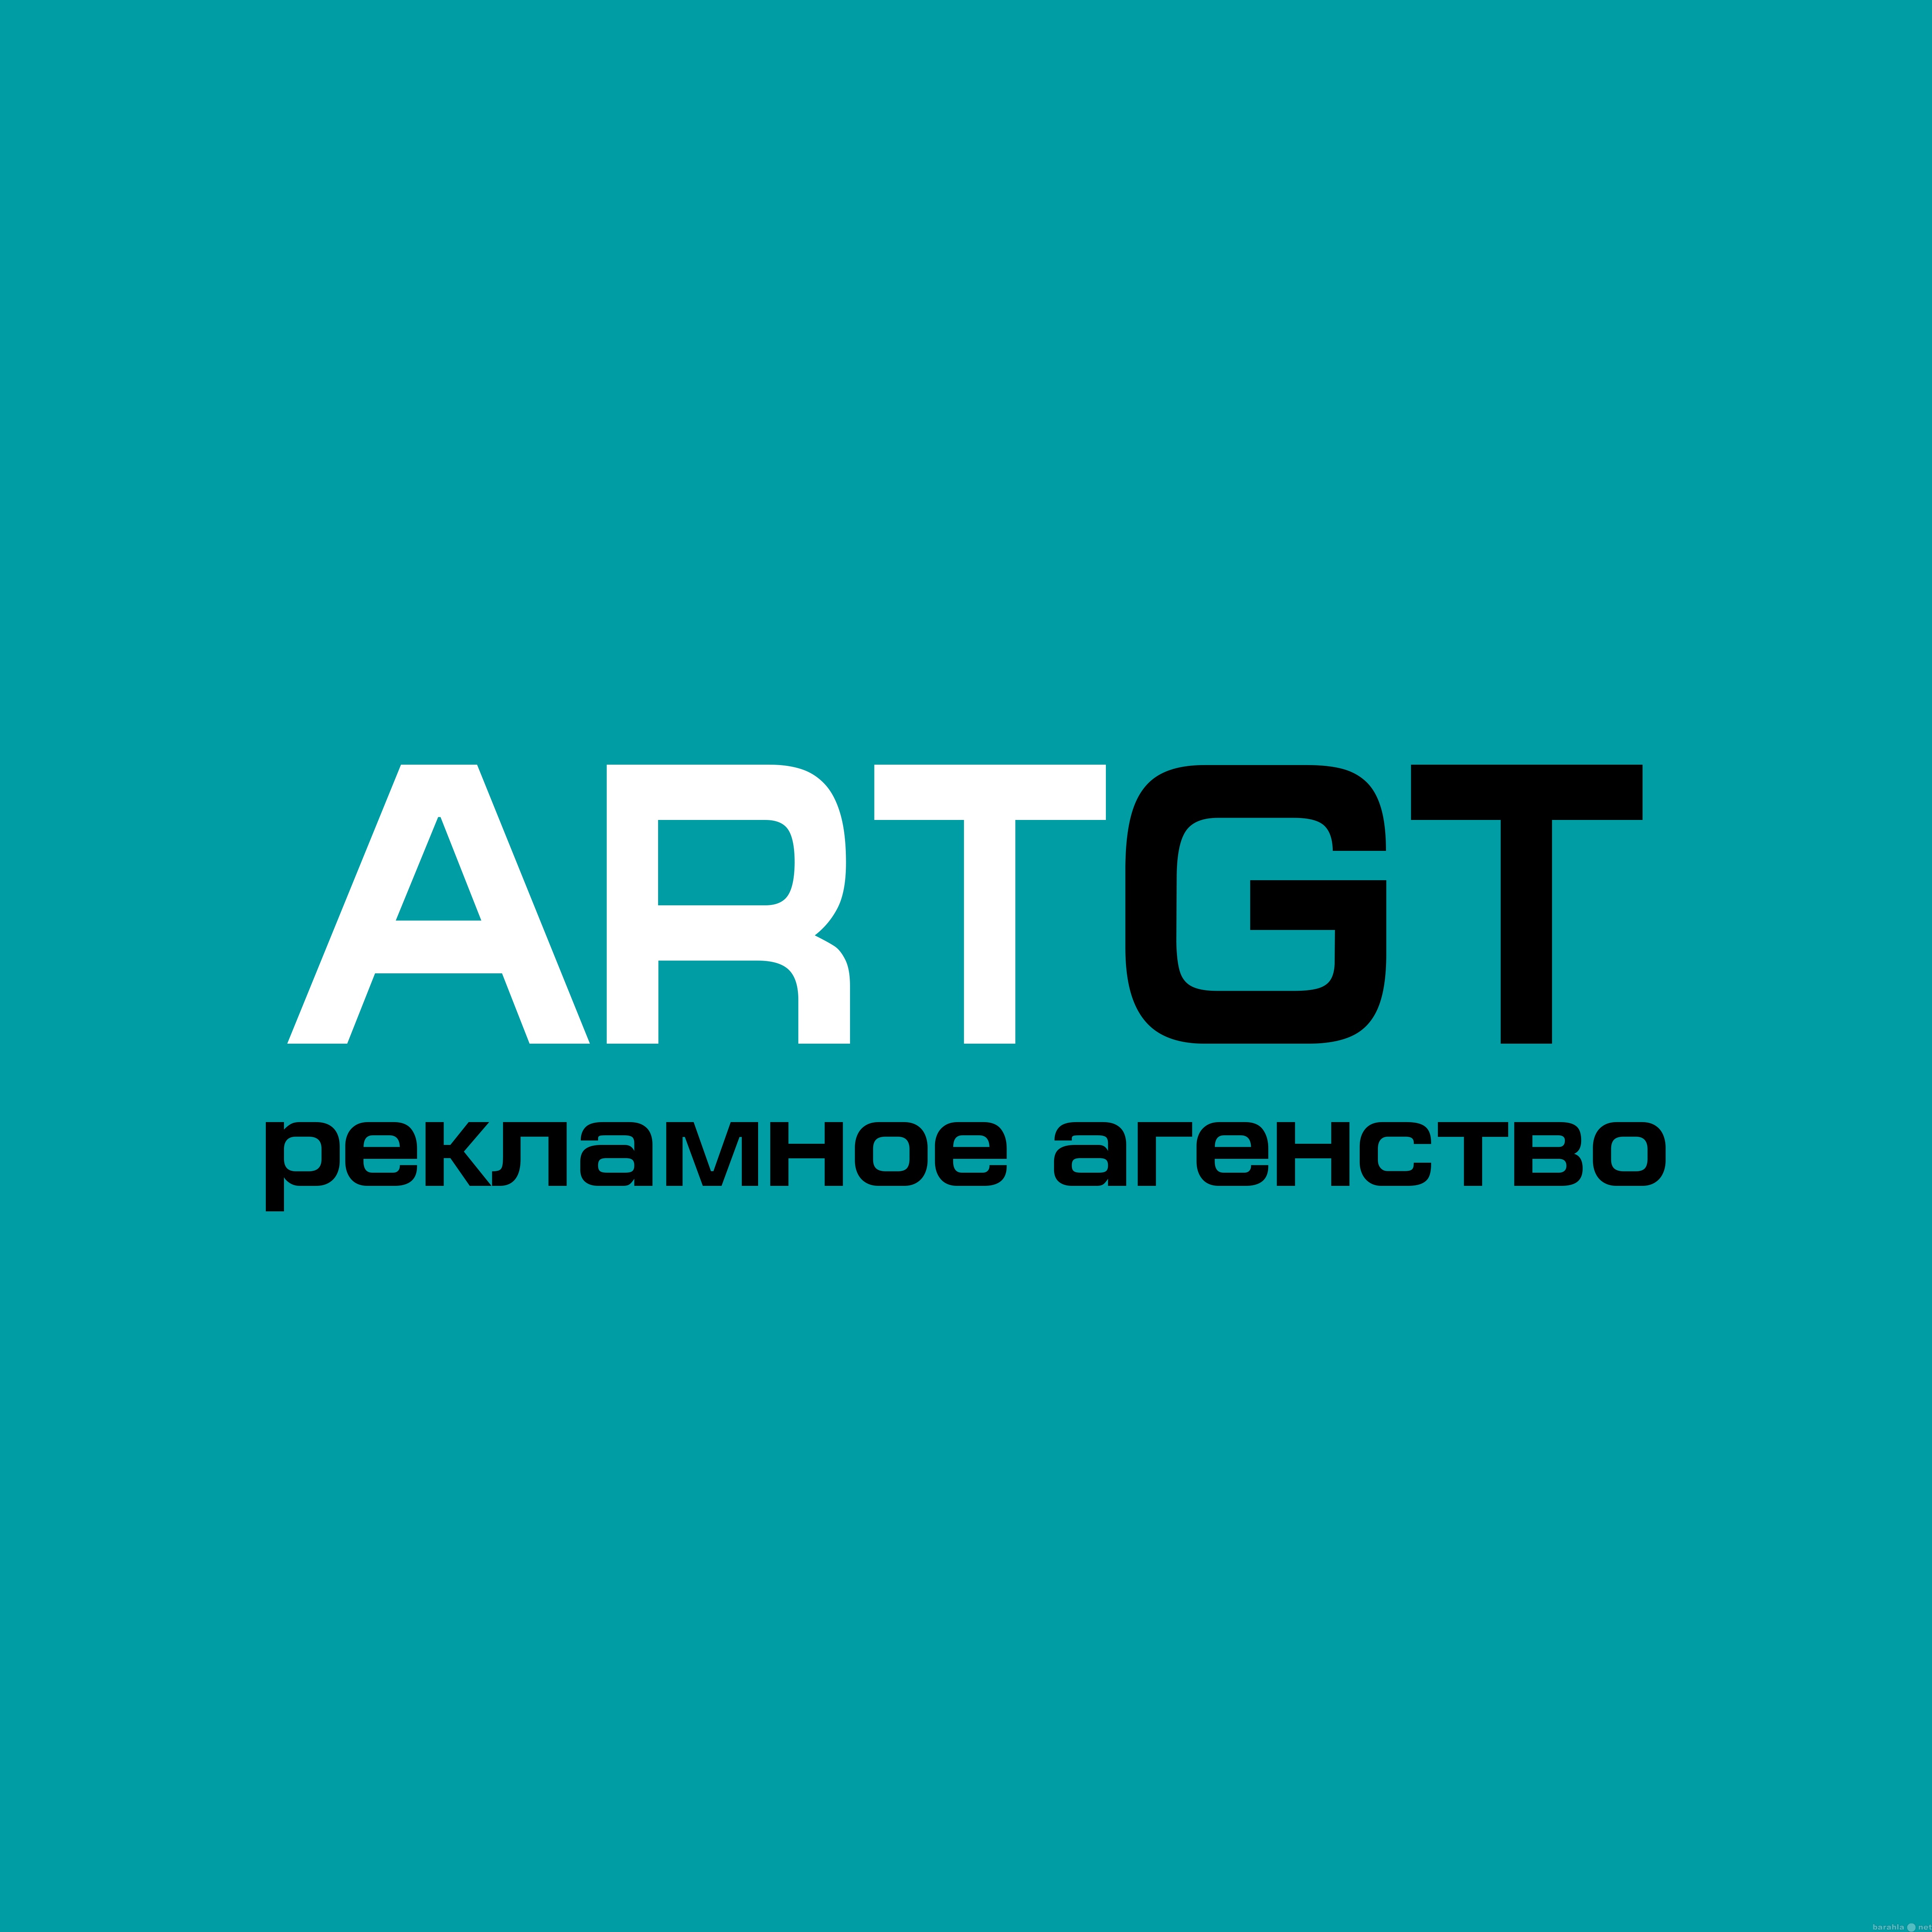 Предложение: Рекламное агентство "ARTGT"